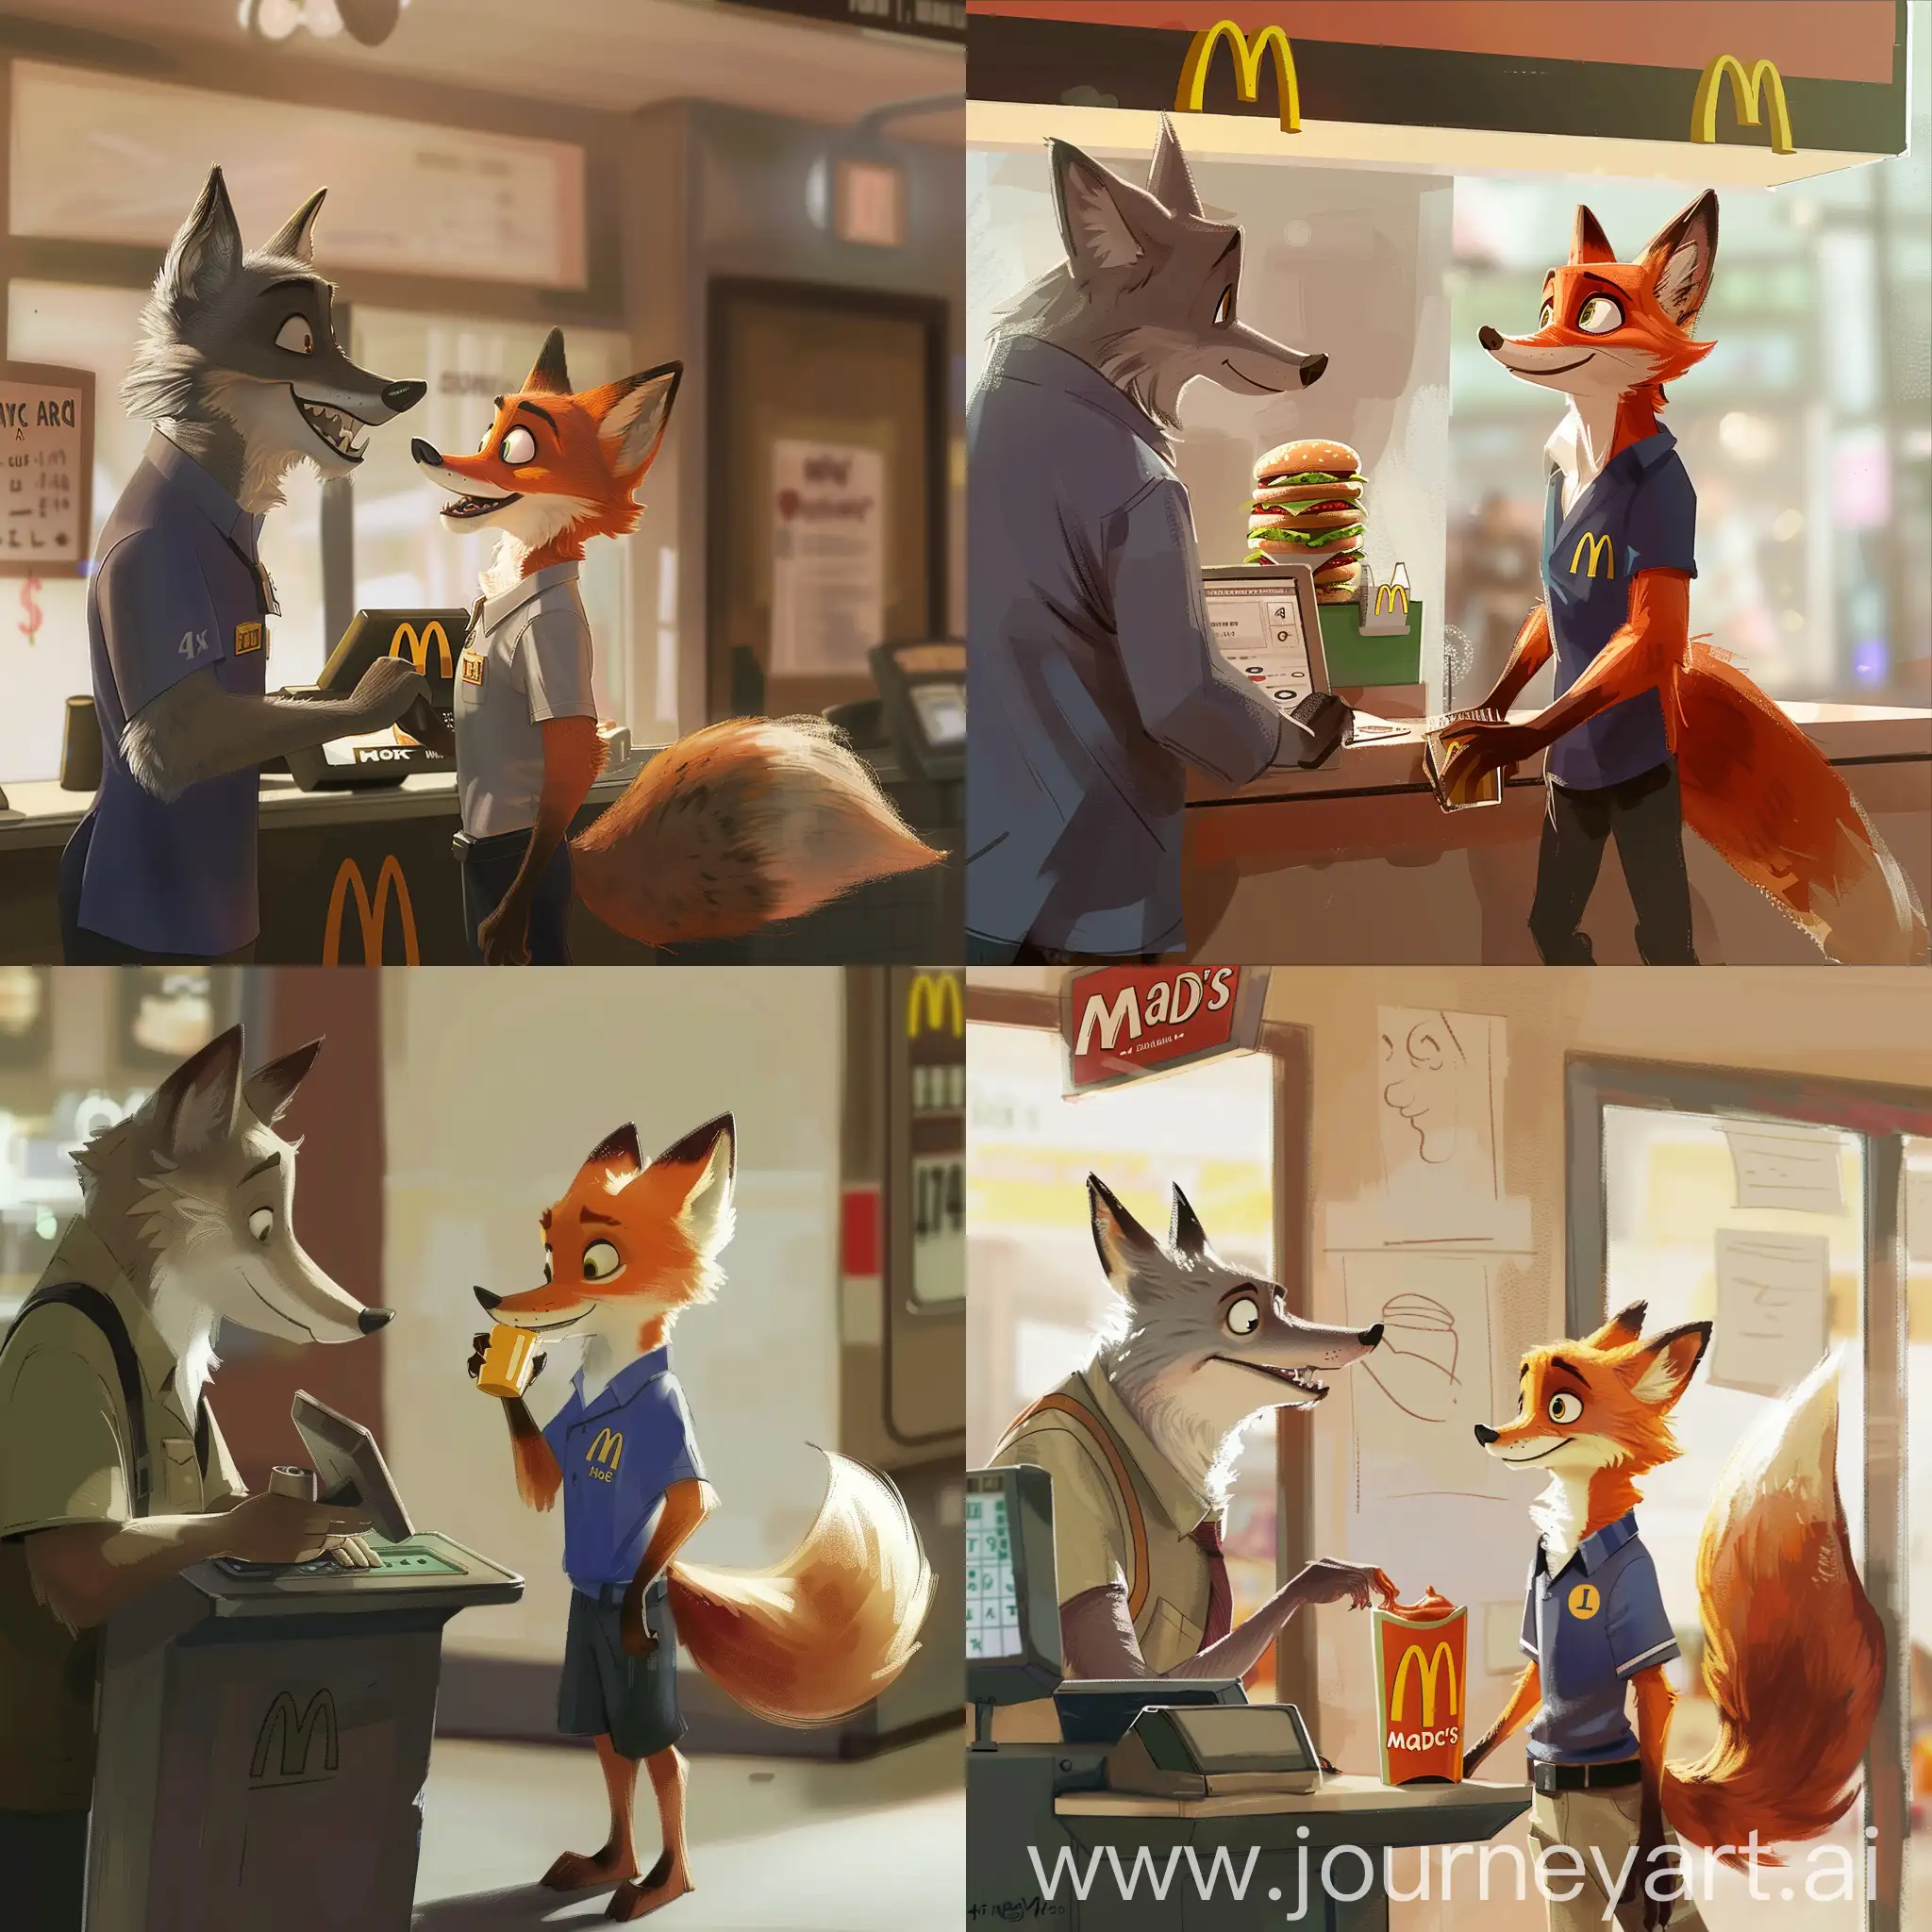 Fox-Ordering-Barrel-Sauce-at-McDonalds-Disney-Animation-Style